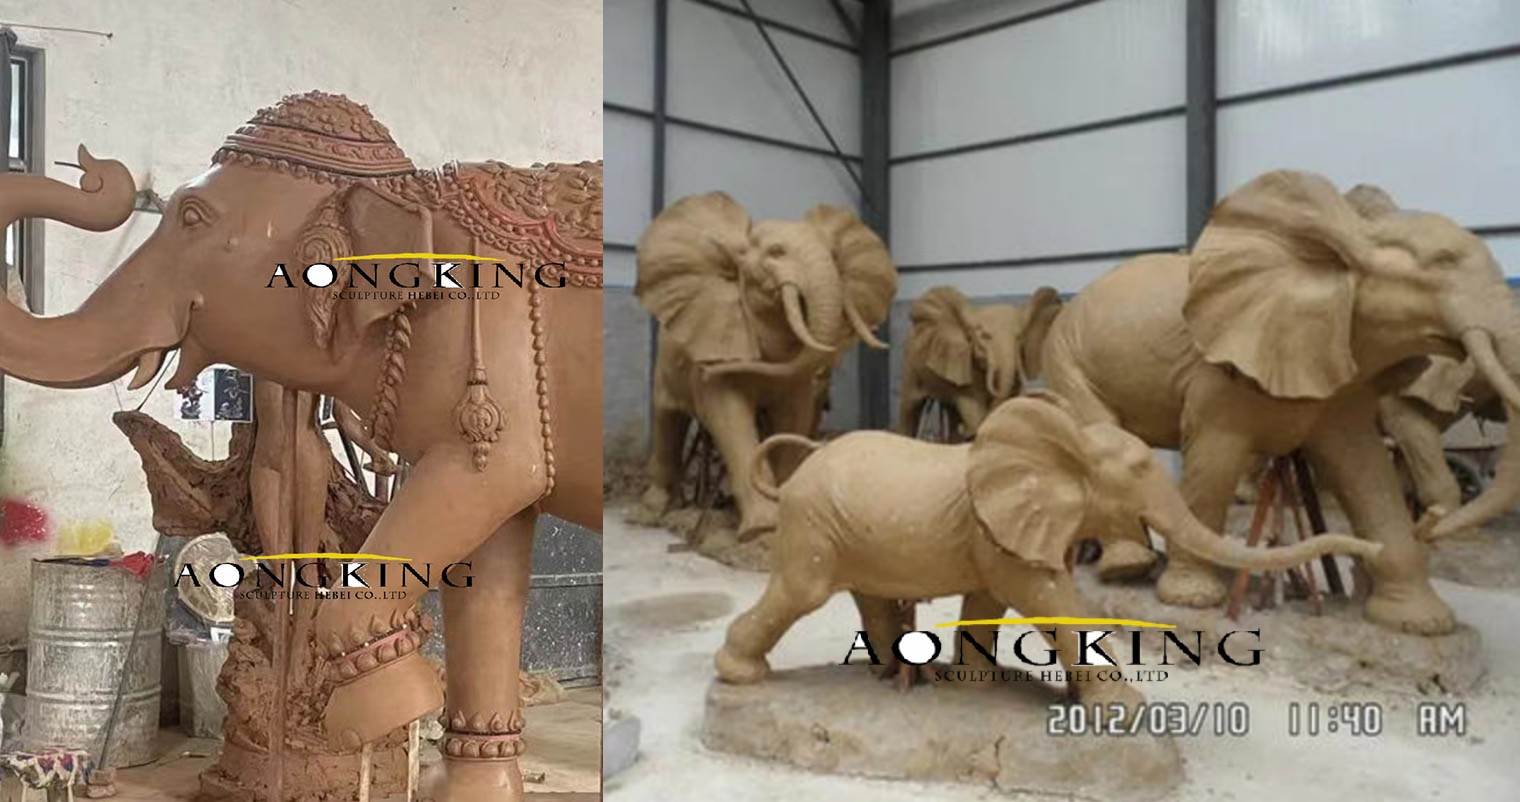 Aongking finished large elephant sculpture